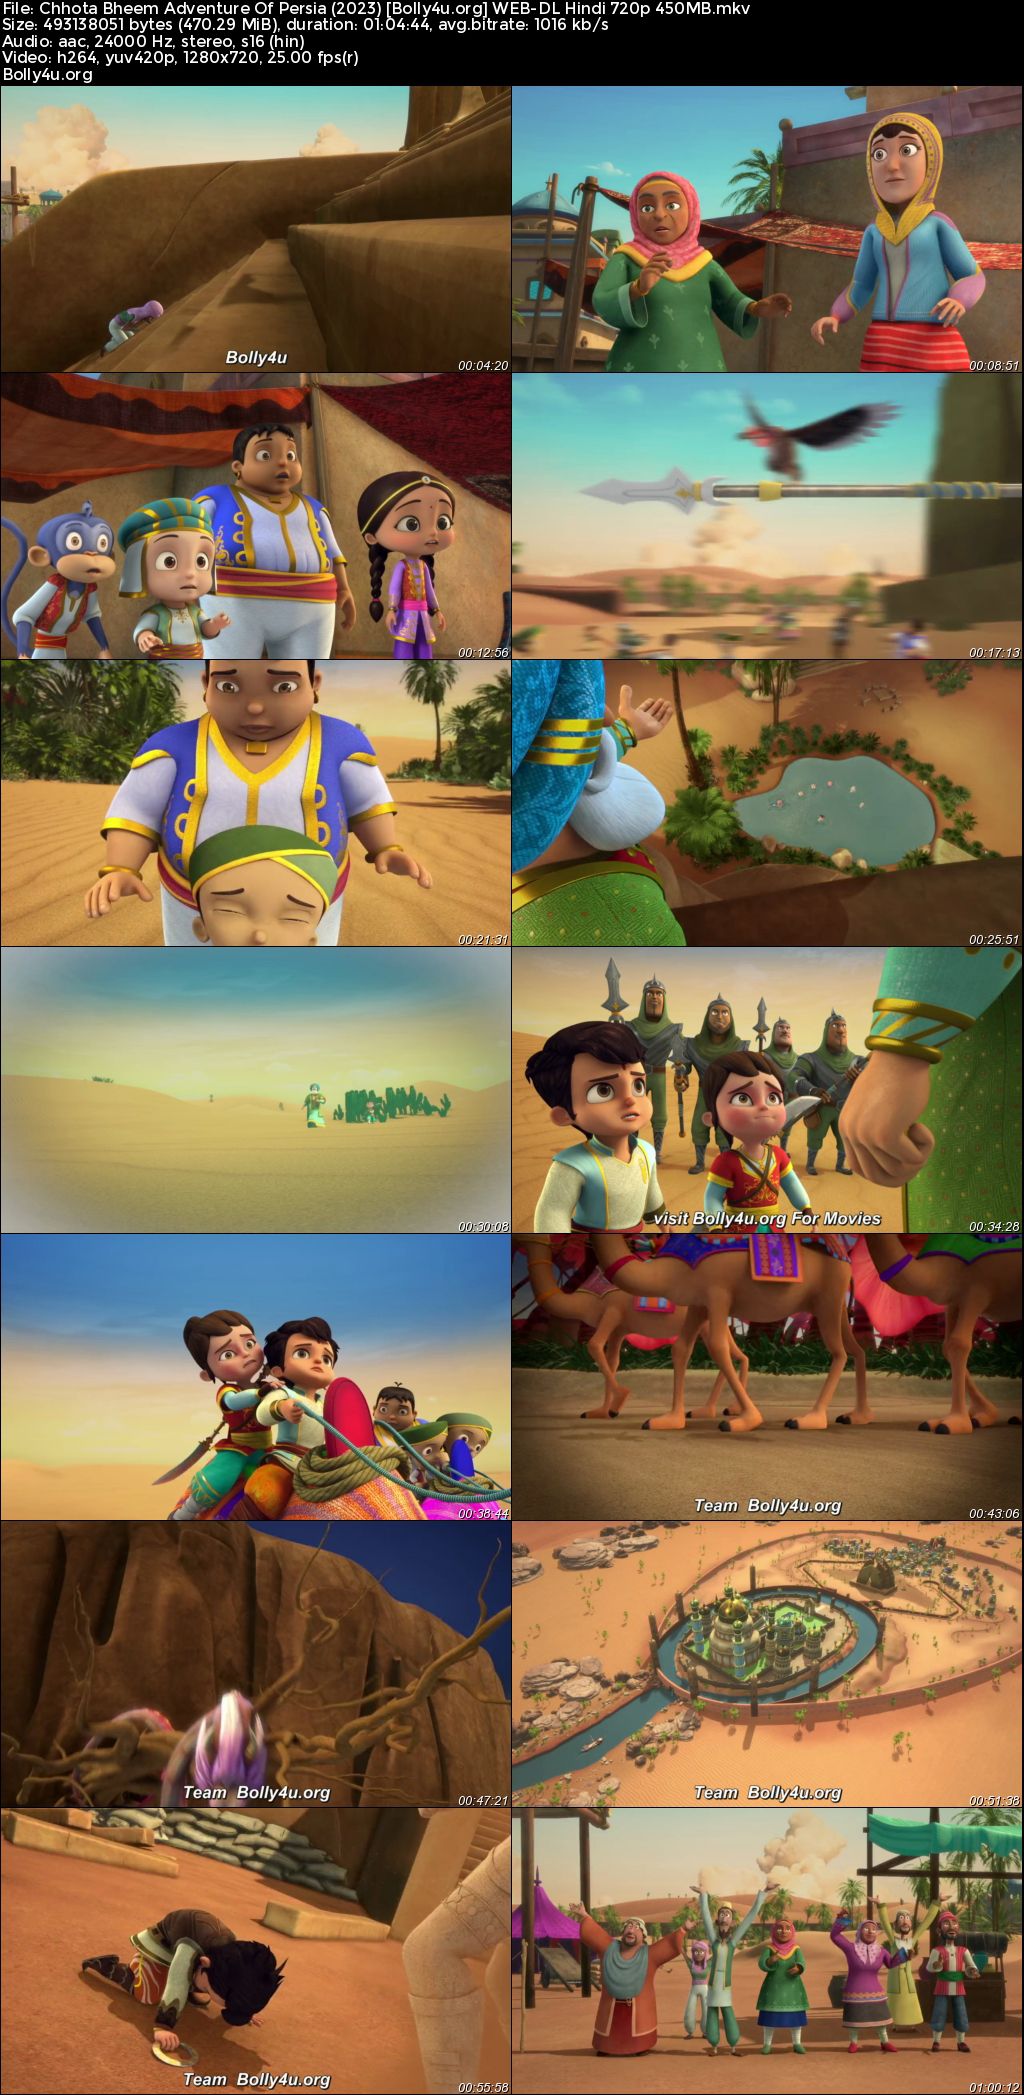 Chhota Bheem Adventure Of Persia 2023 WEB-DL Hindi Full Movie Download 1080p 720p 480p